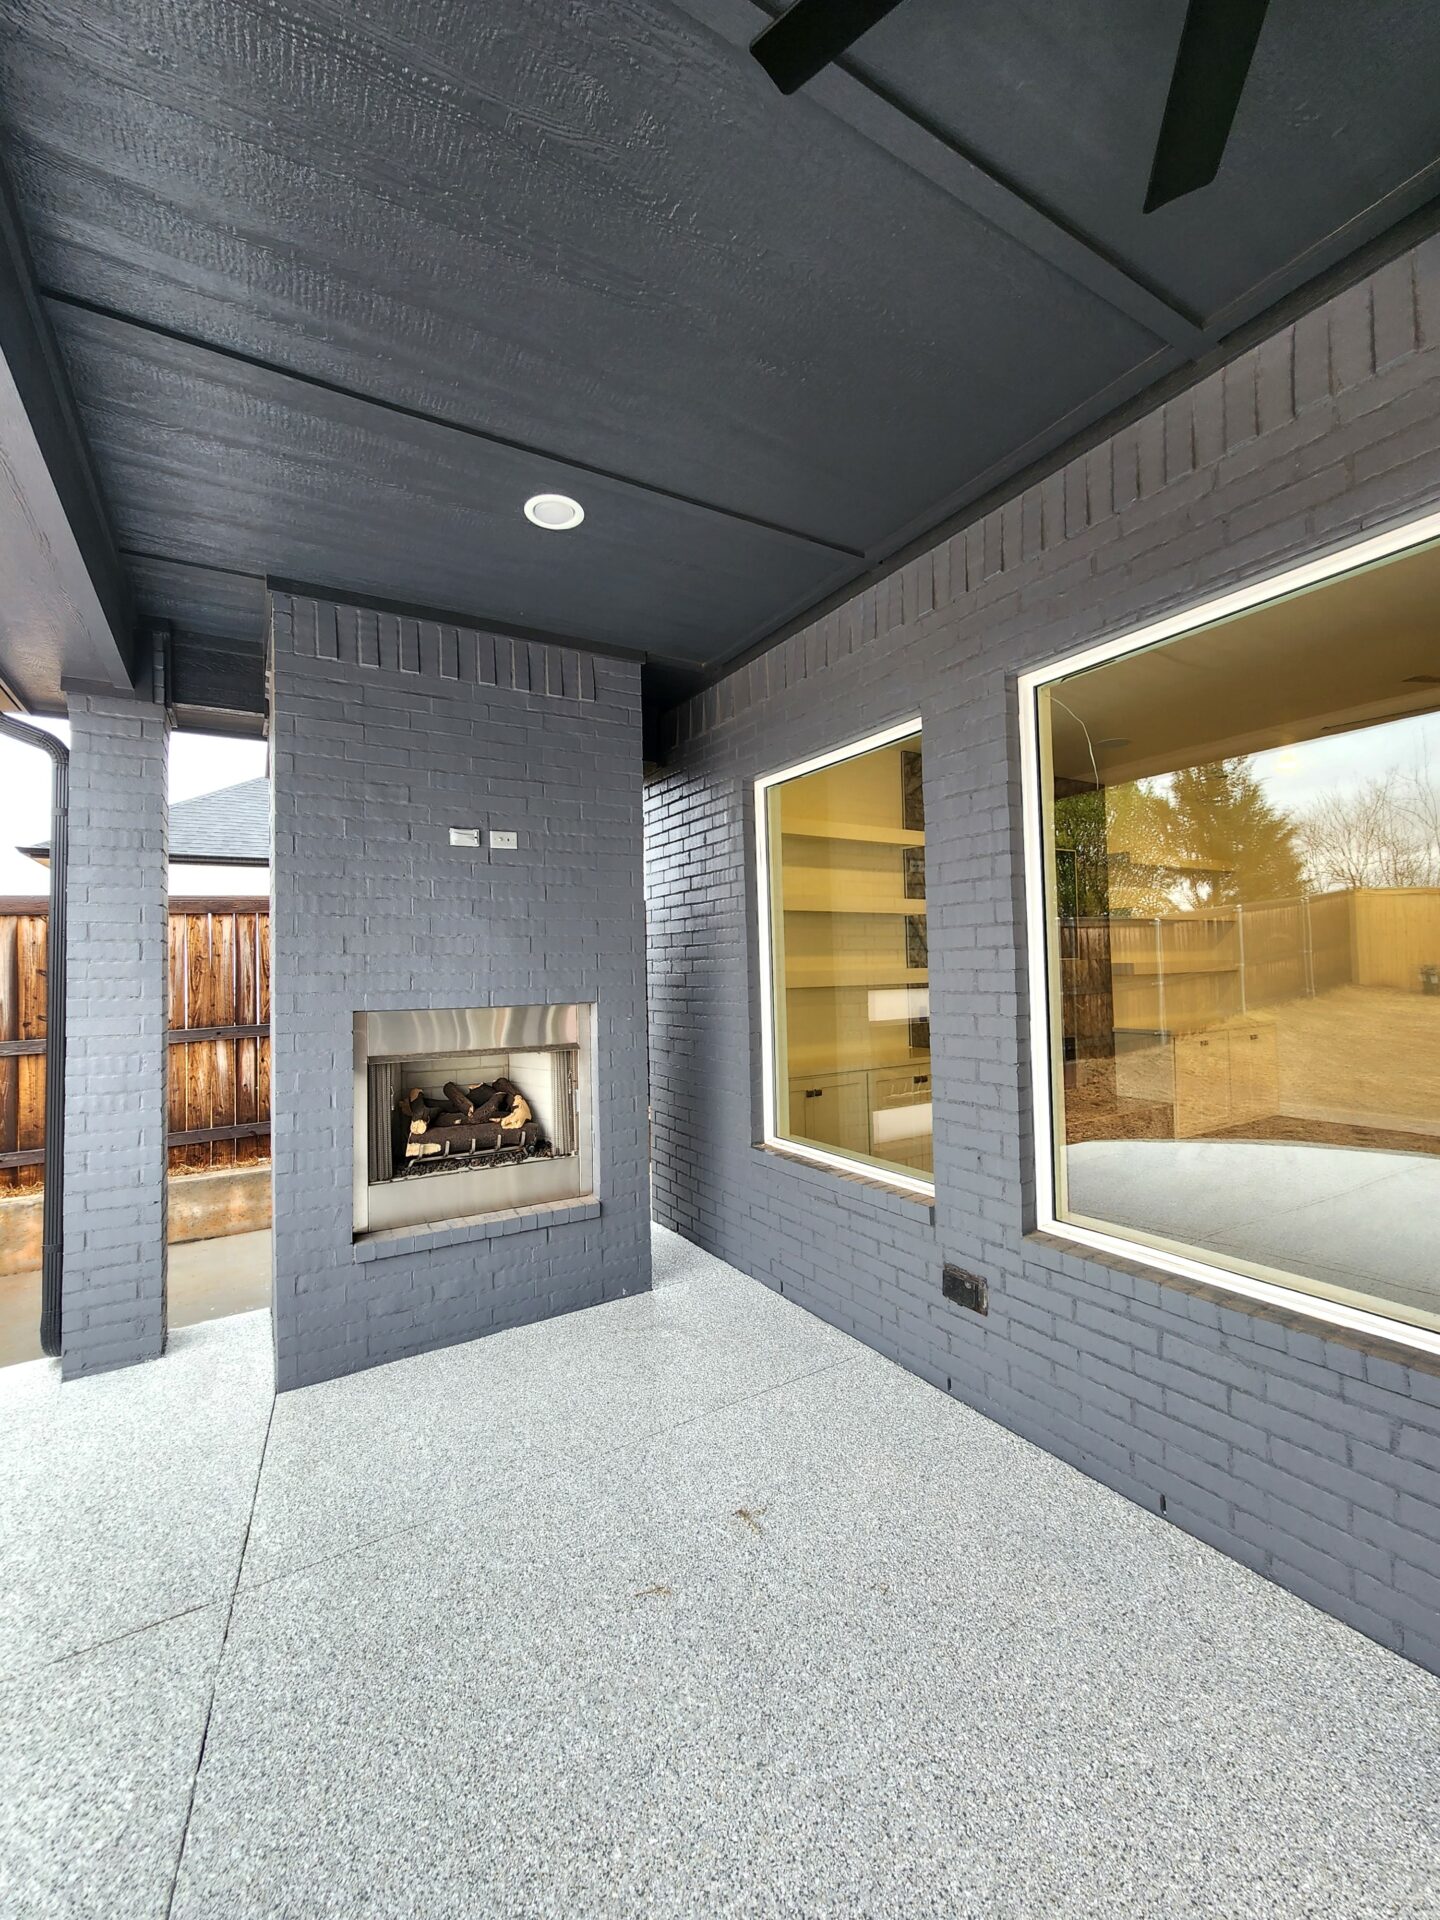 Outdoor fireplace, exterior, outdoor living, patio